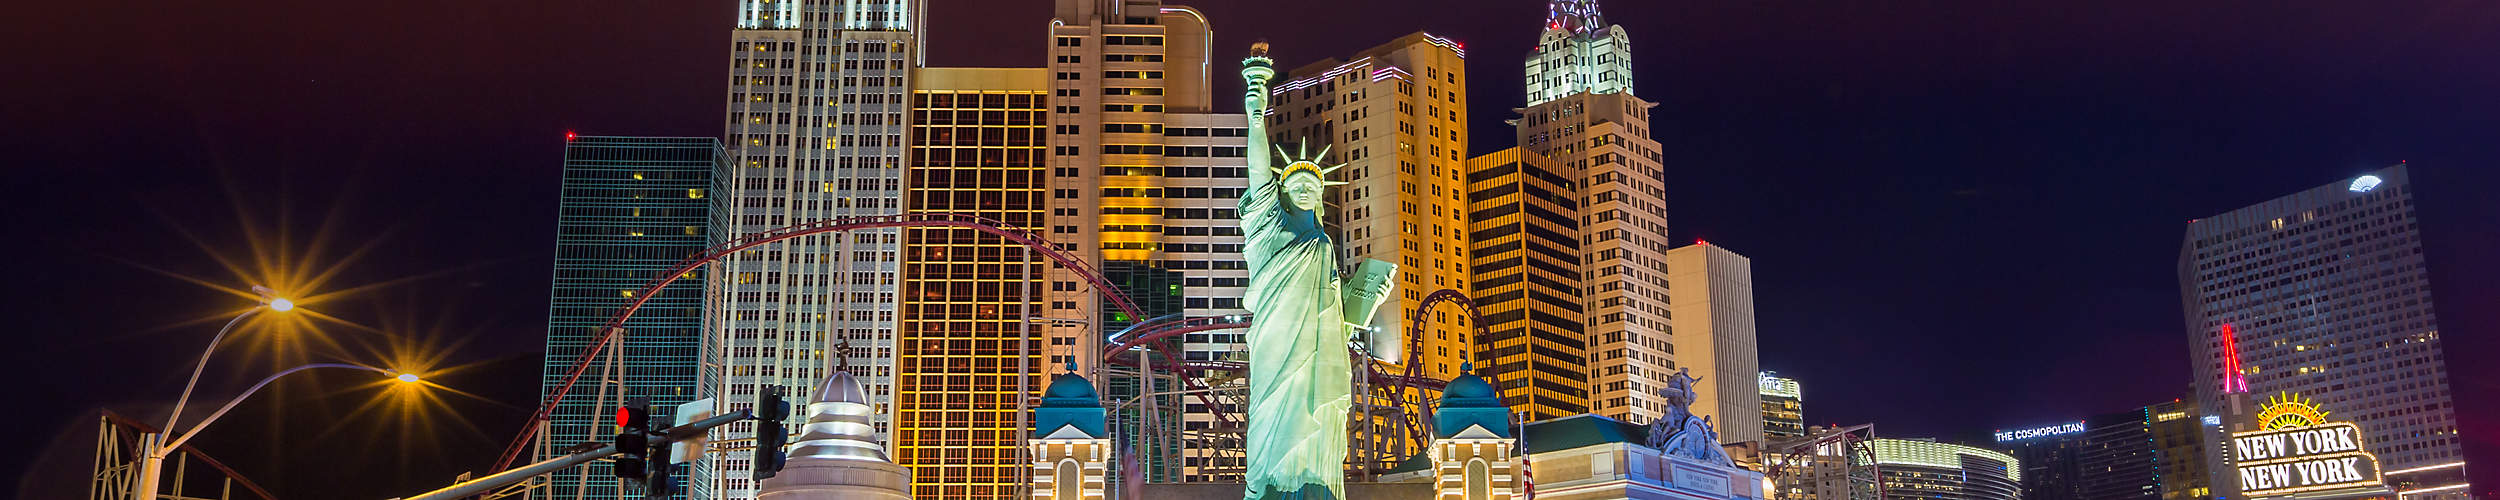 Las Vegas, Nevada New York New York Hotel at night